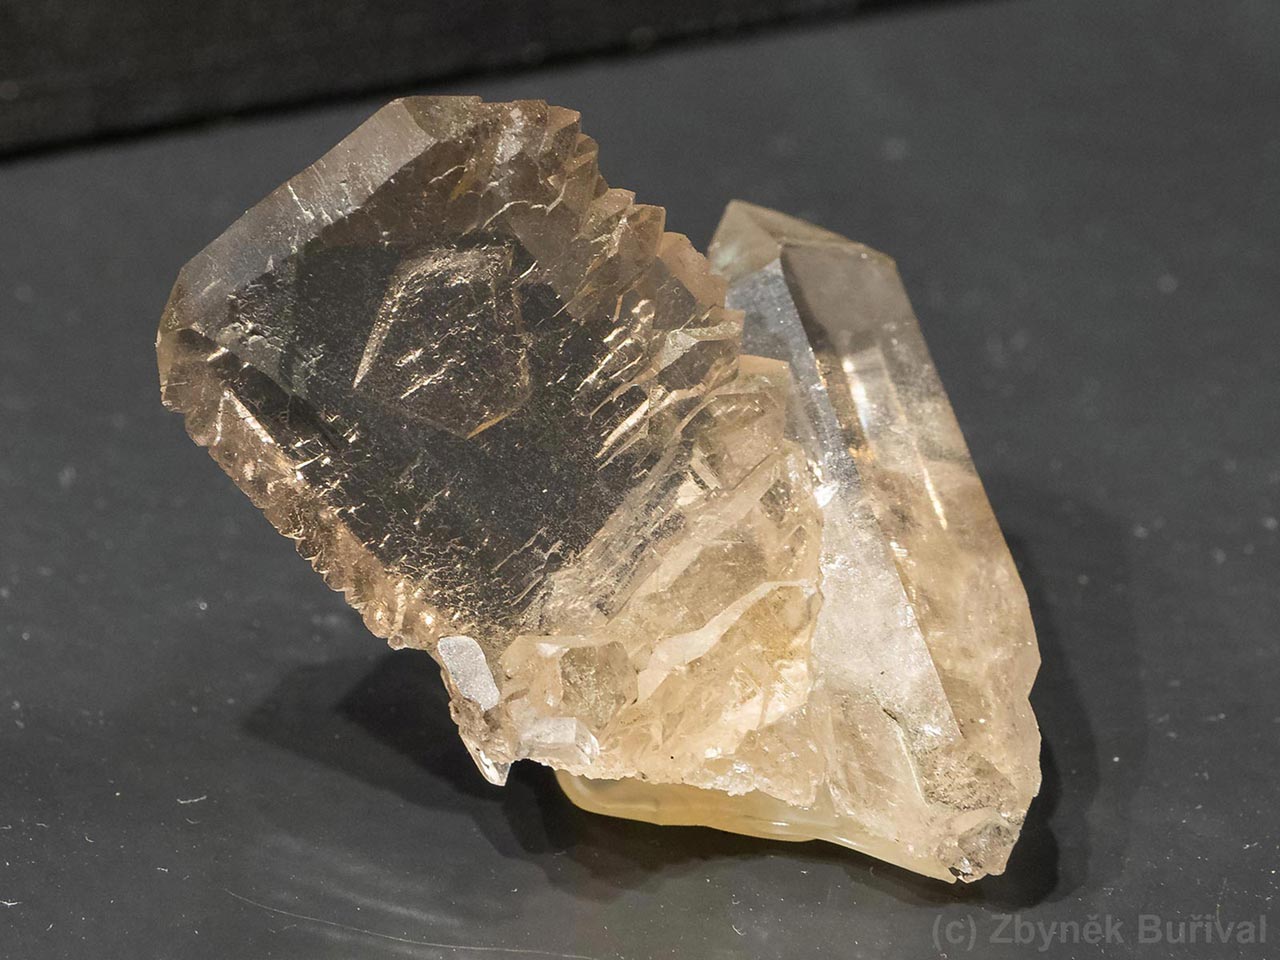 Semi-closed smoky quartz gwindel from Göscheneralp, Switzerland